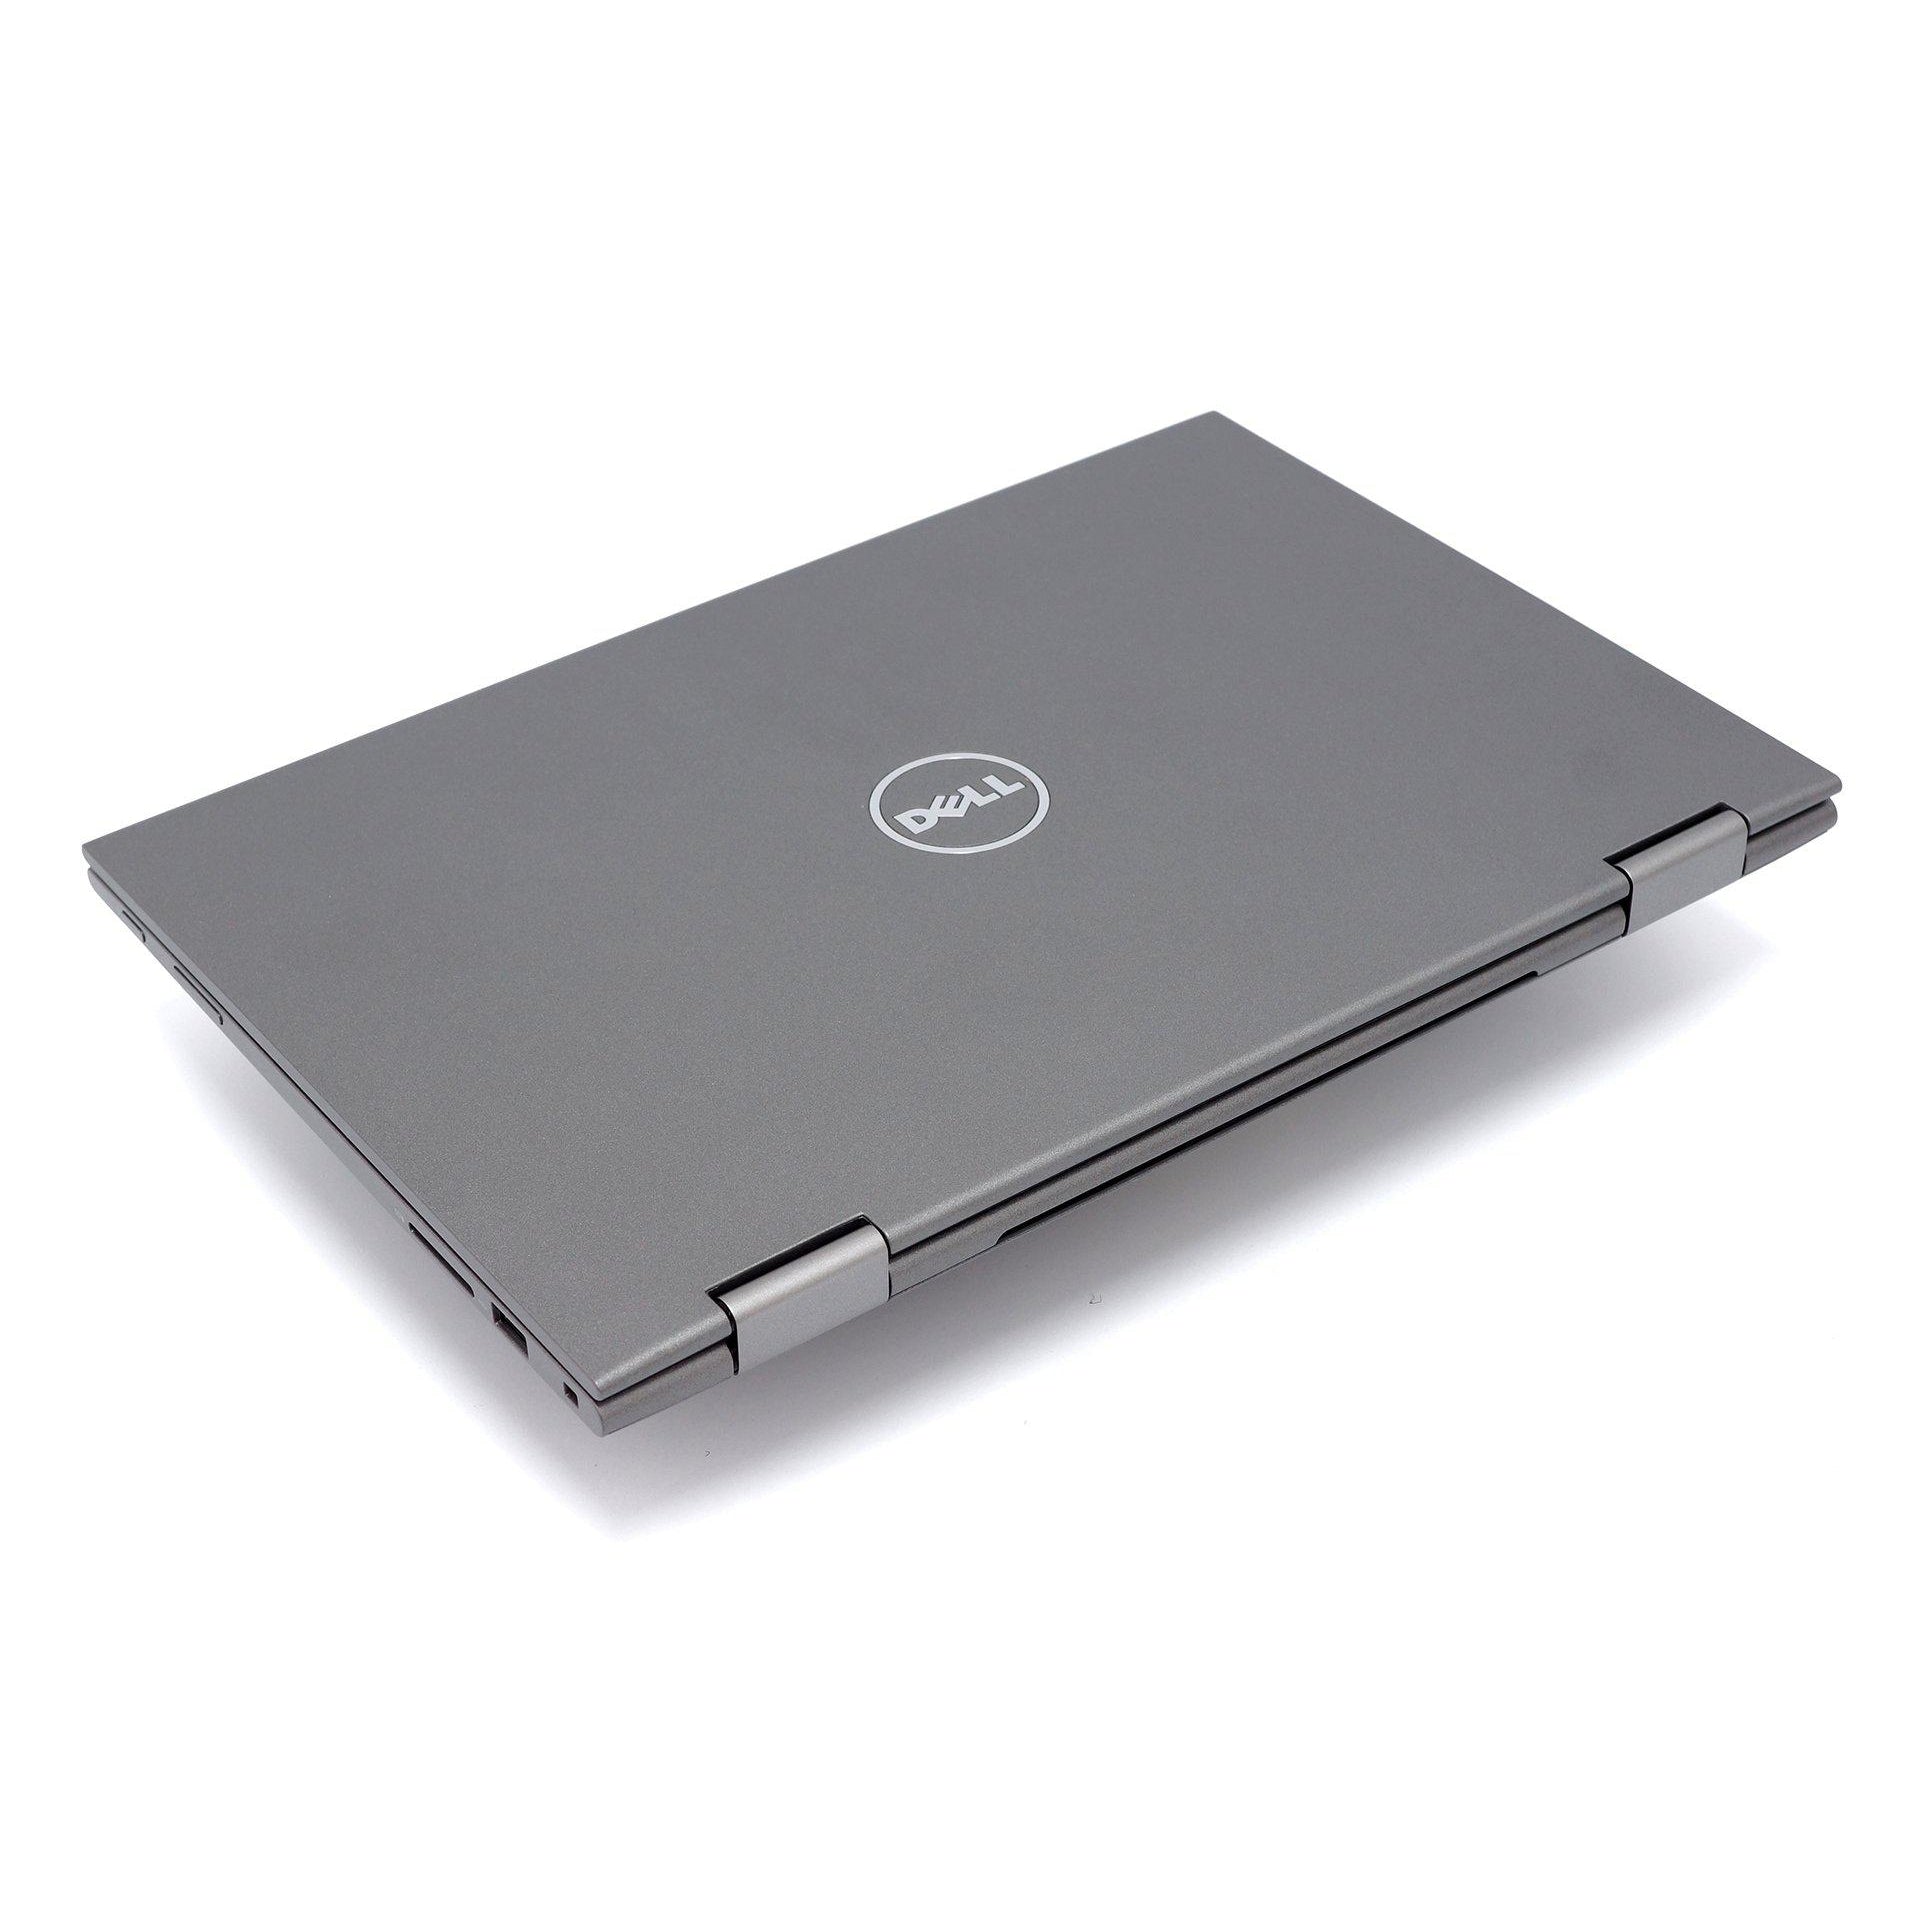 Dell Inspiron 13 5379, 13.3" Laptop, Intel Core i5, 8GB RAM, 256GB SSD, Grey - Refurbished Good